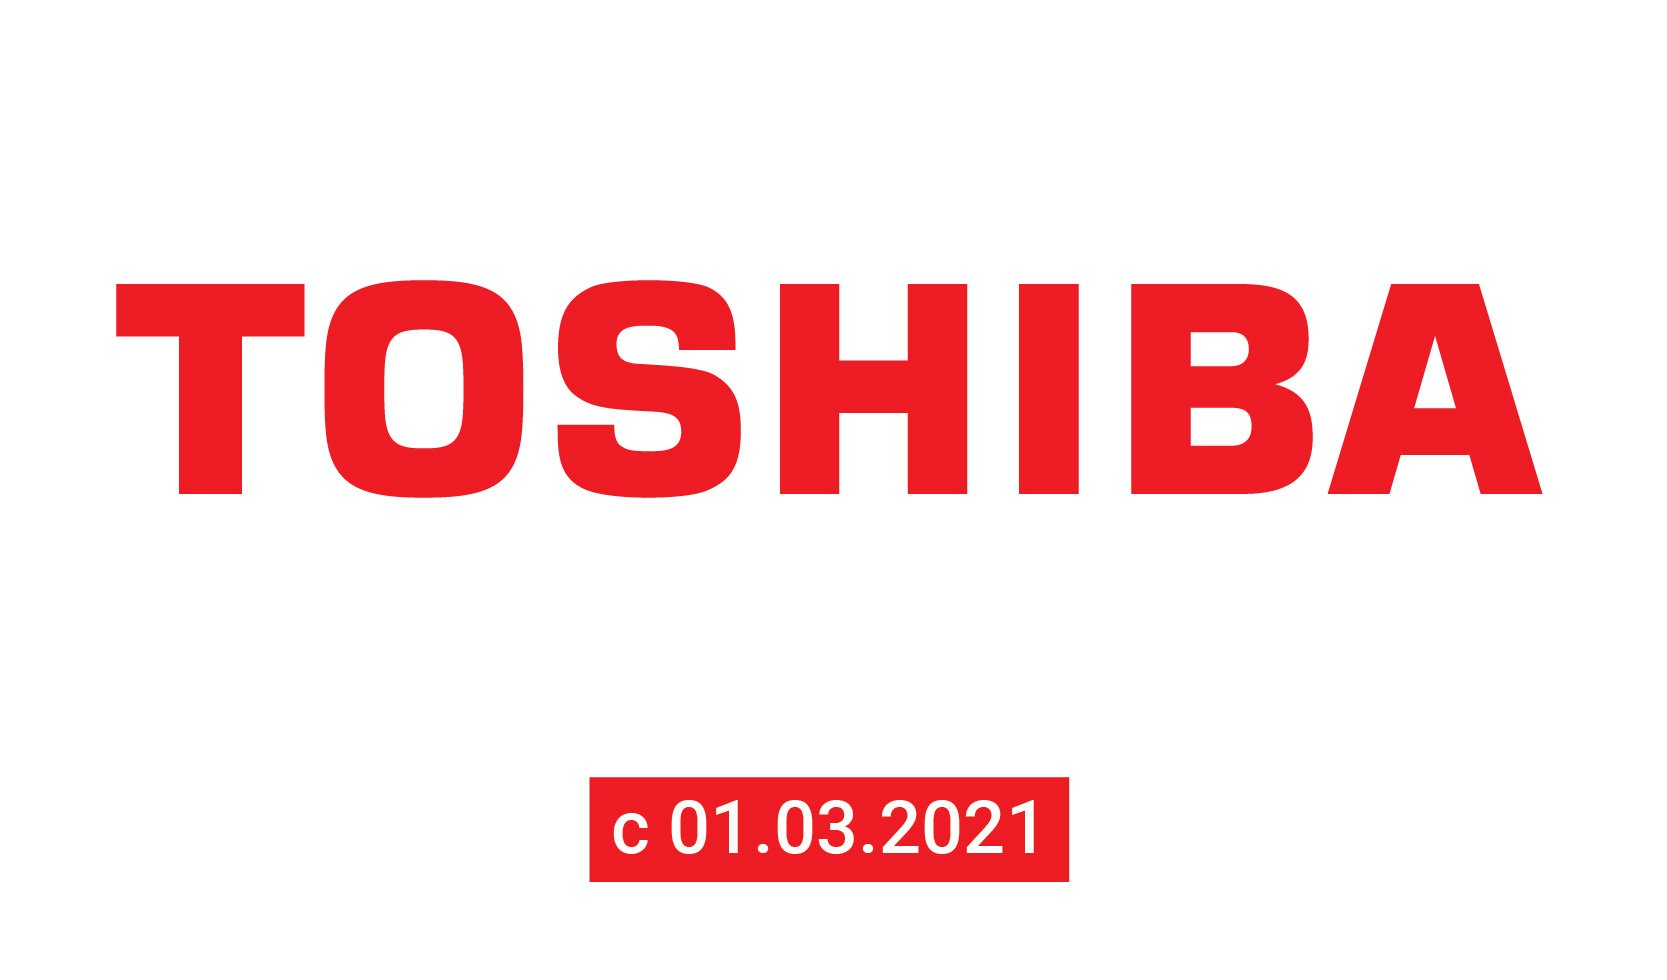 TOSHIBA - начало сотрудничества